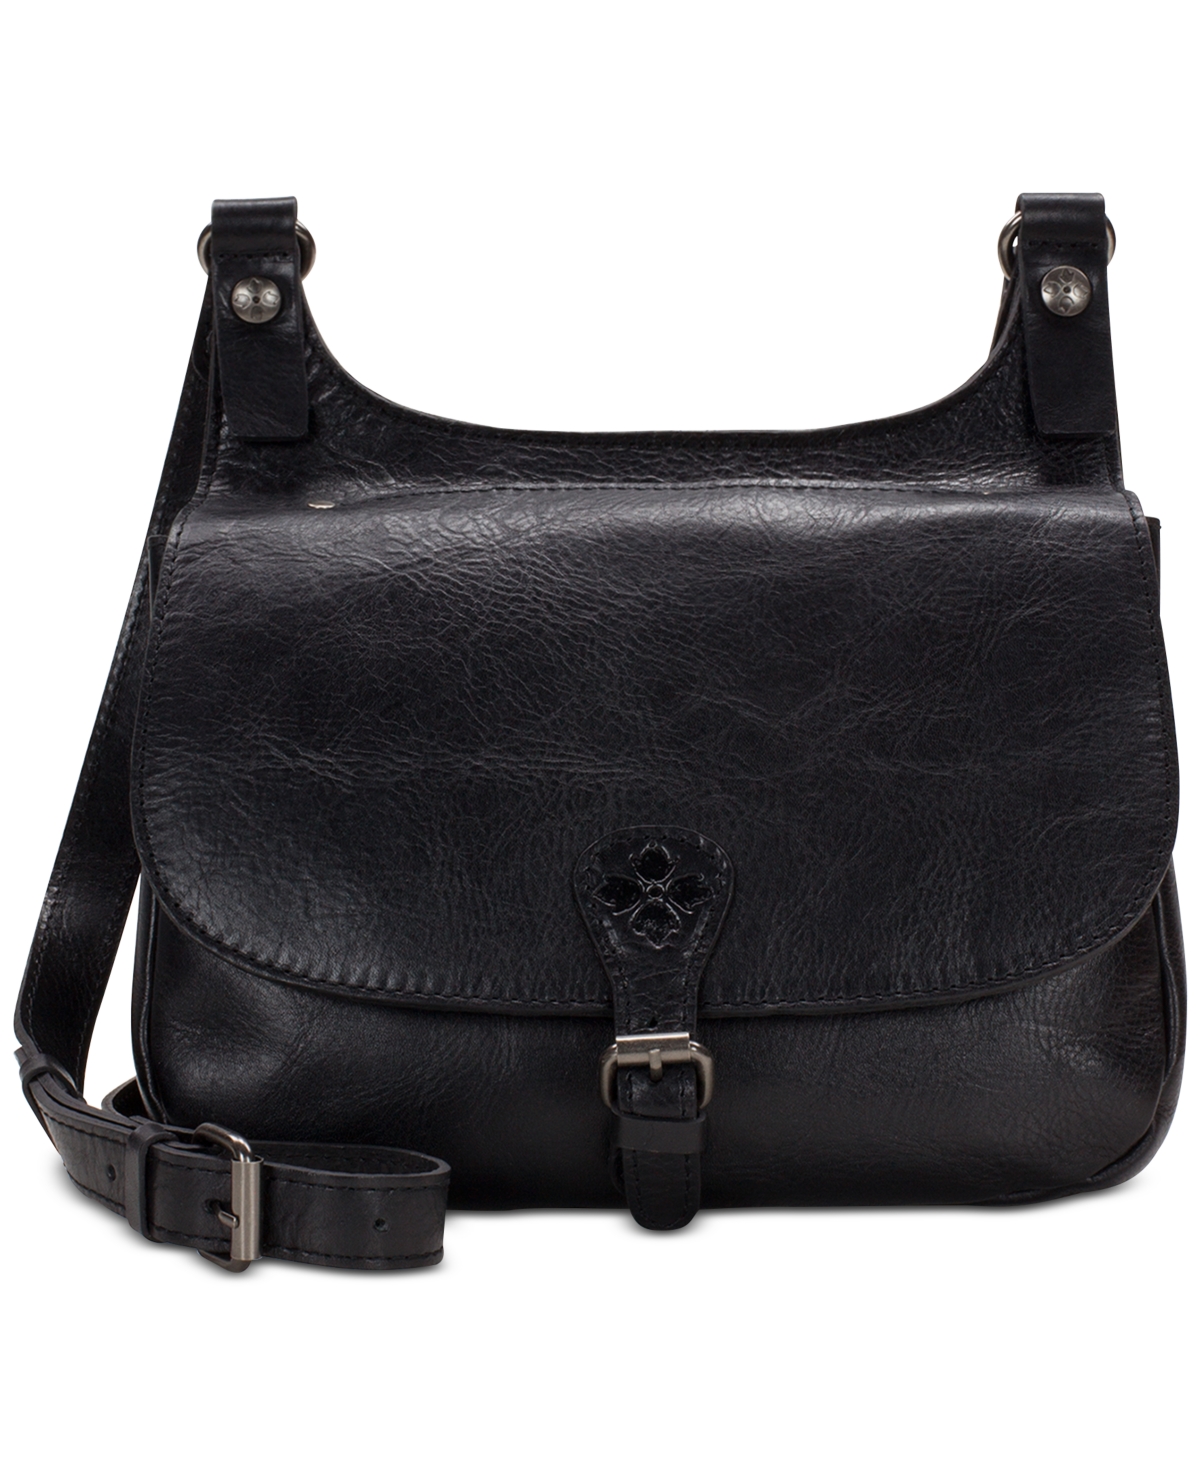 London Smooth Leather Saddle Bag - Black/Silver